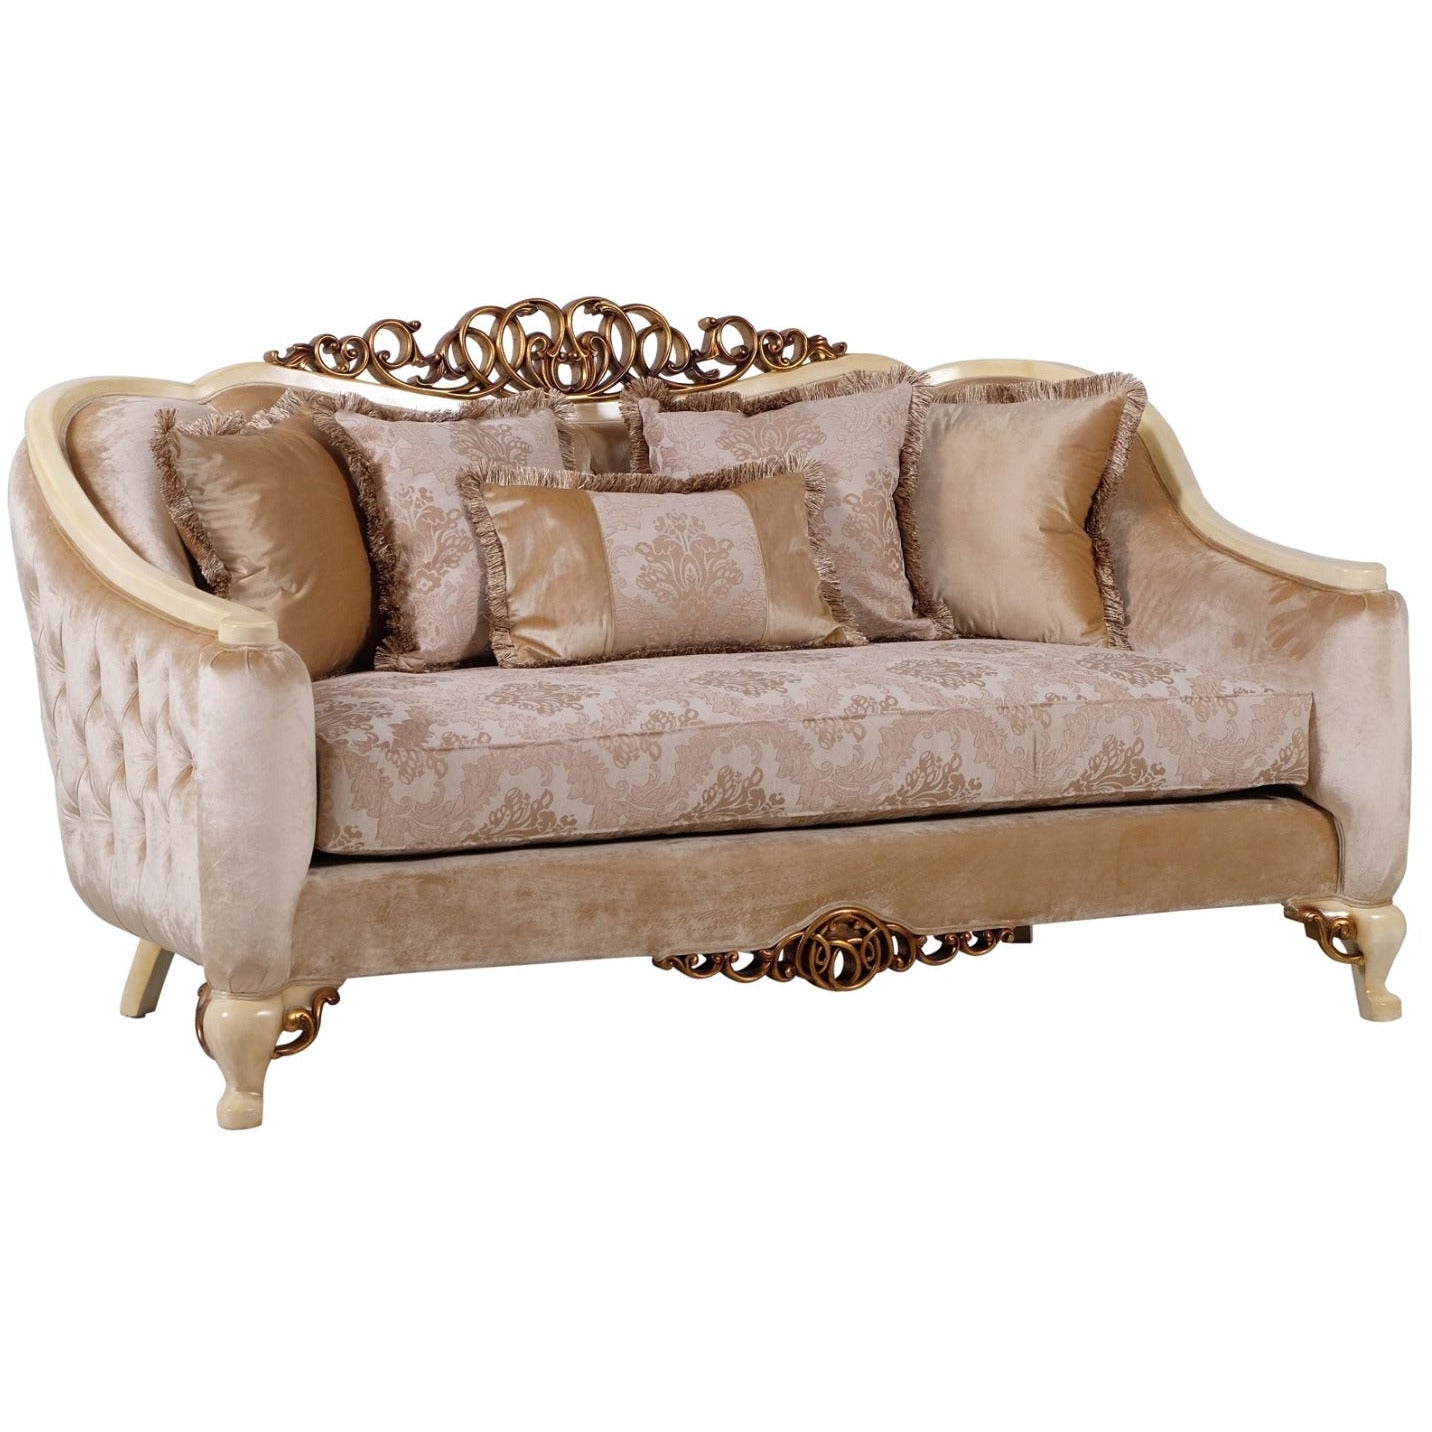 European Furniture - Angelica 4 Piece Living Room Set in Beige & Gold - 45350-4SET - New Star Living